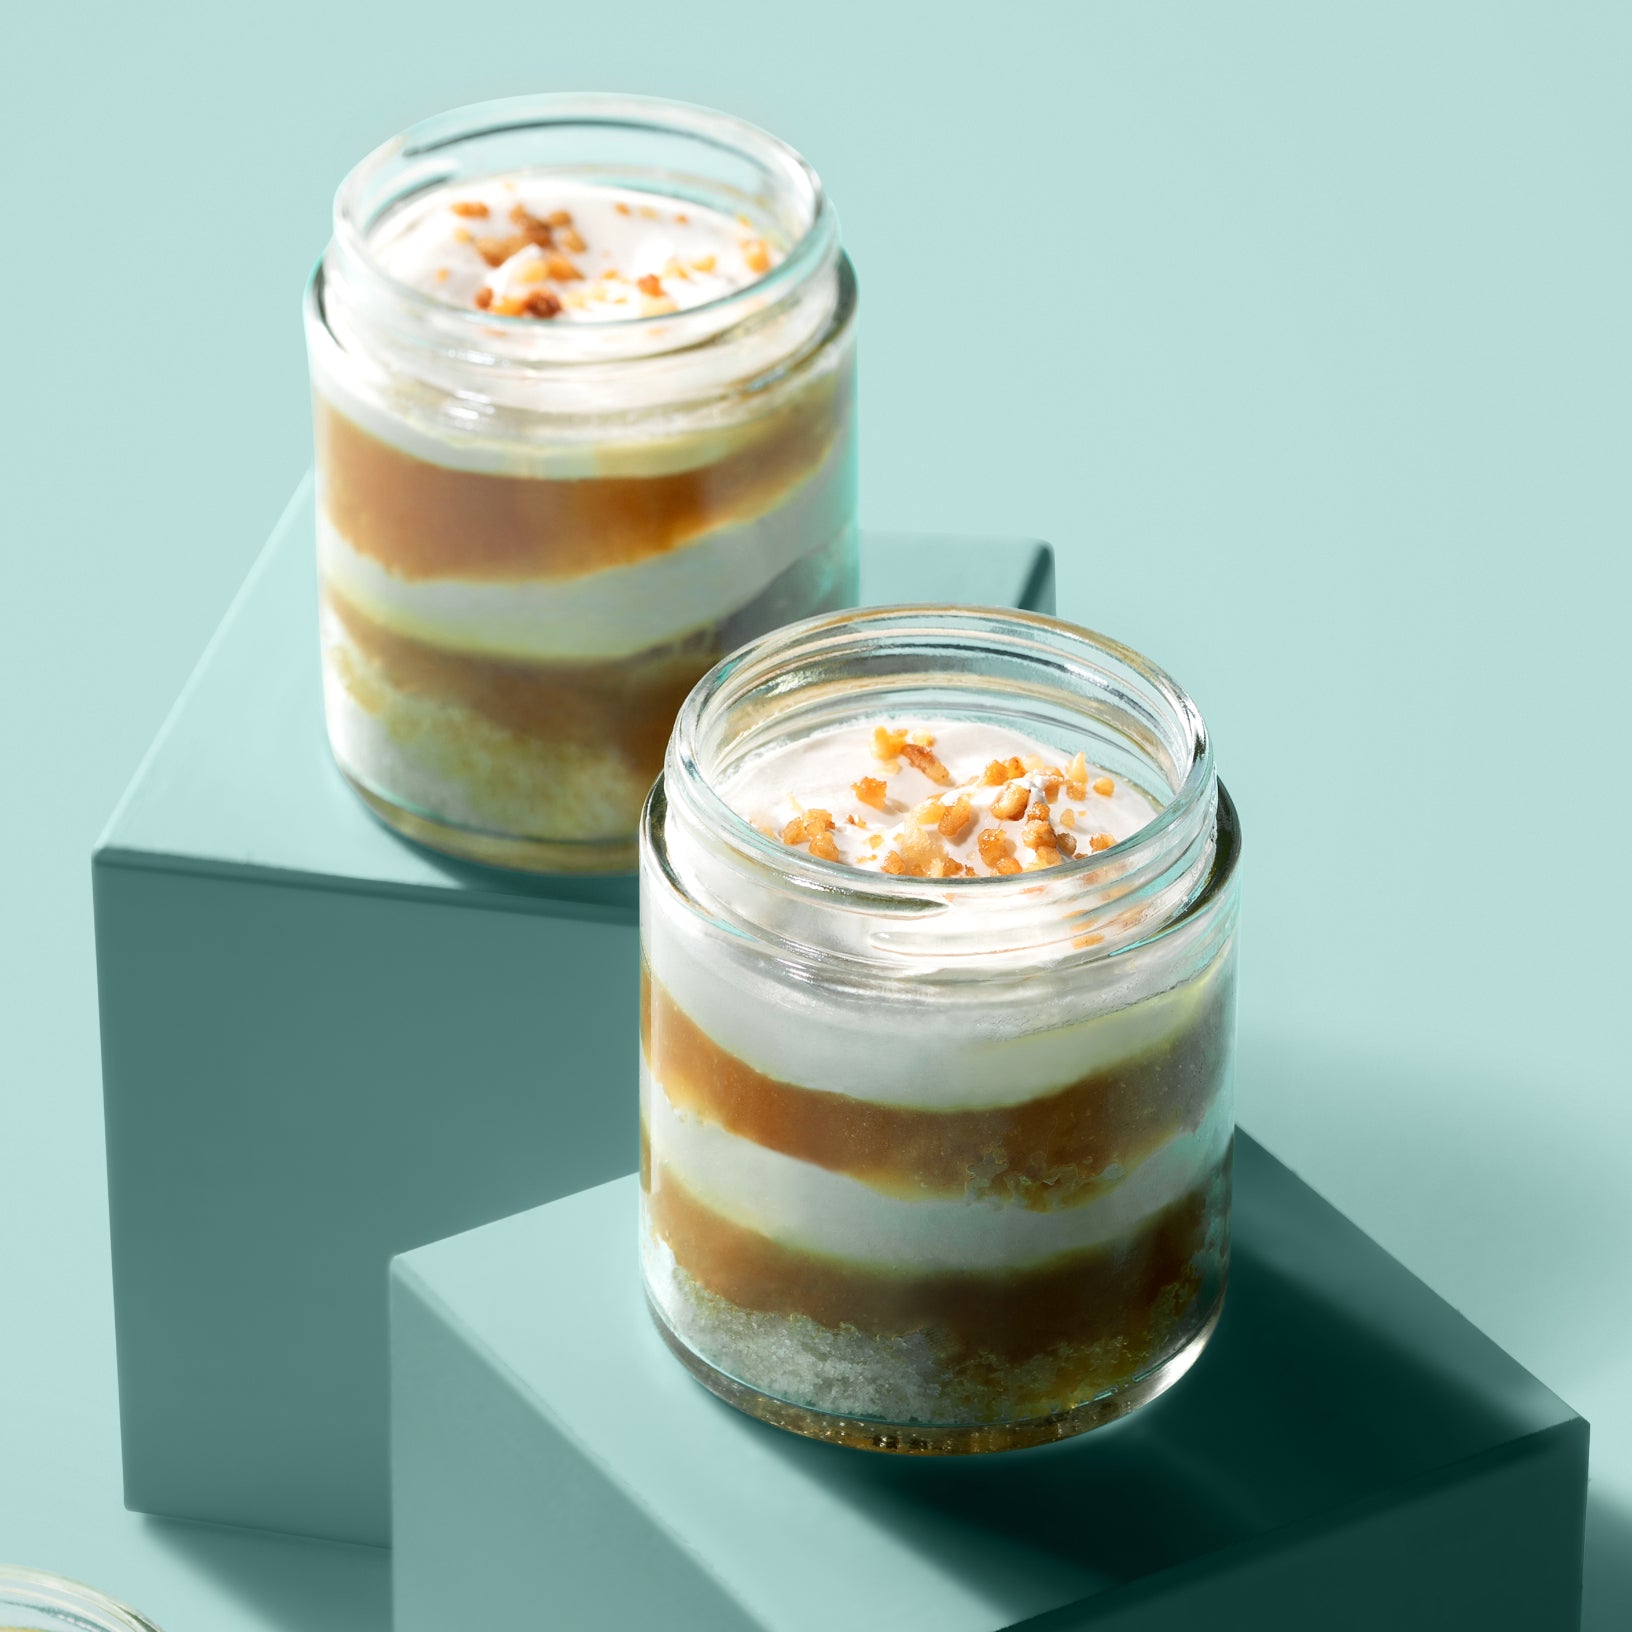 Buy Butterscotch Cake in a Jar online - WarmOven